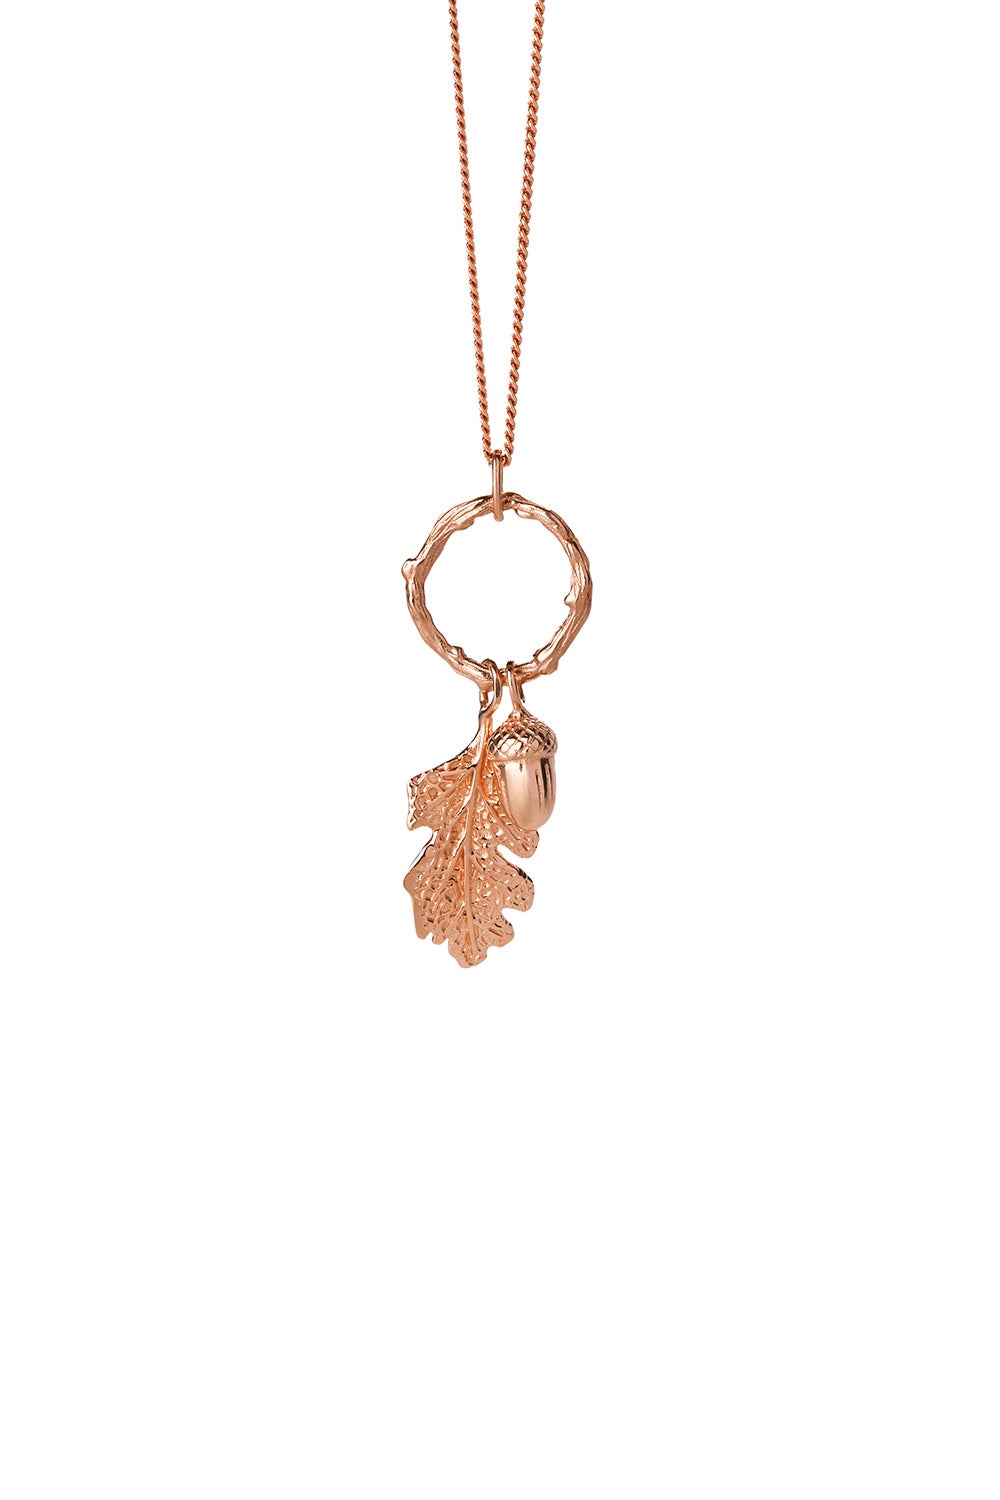 Acorn and Leaf Loop Necklace Rose Gold